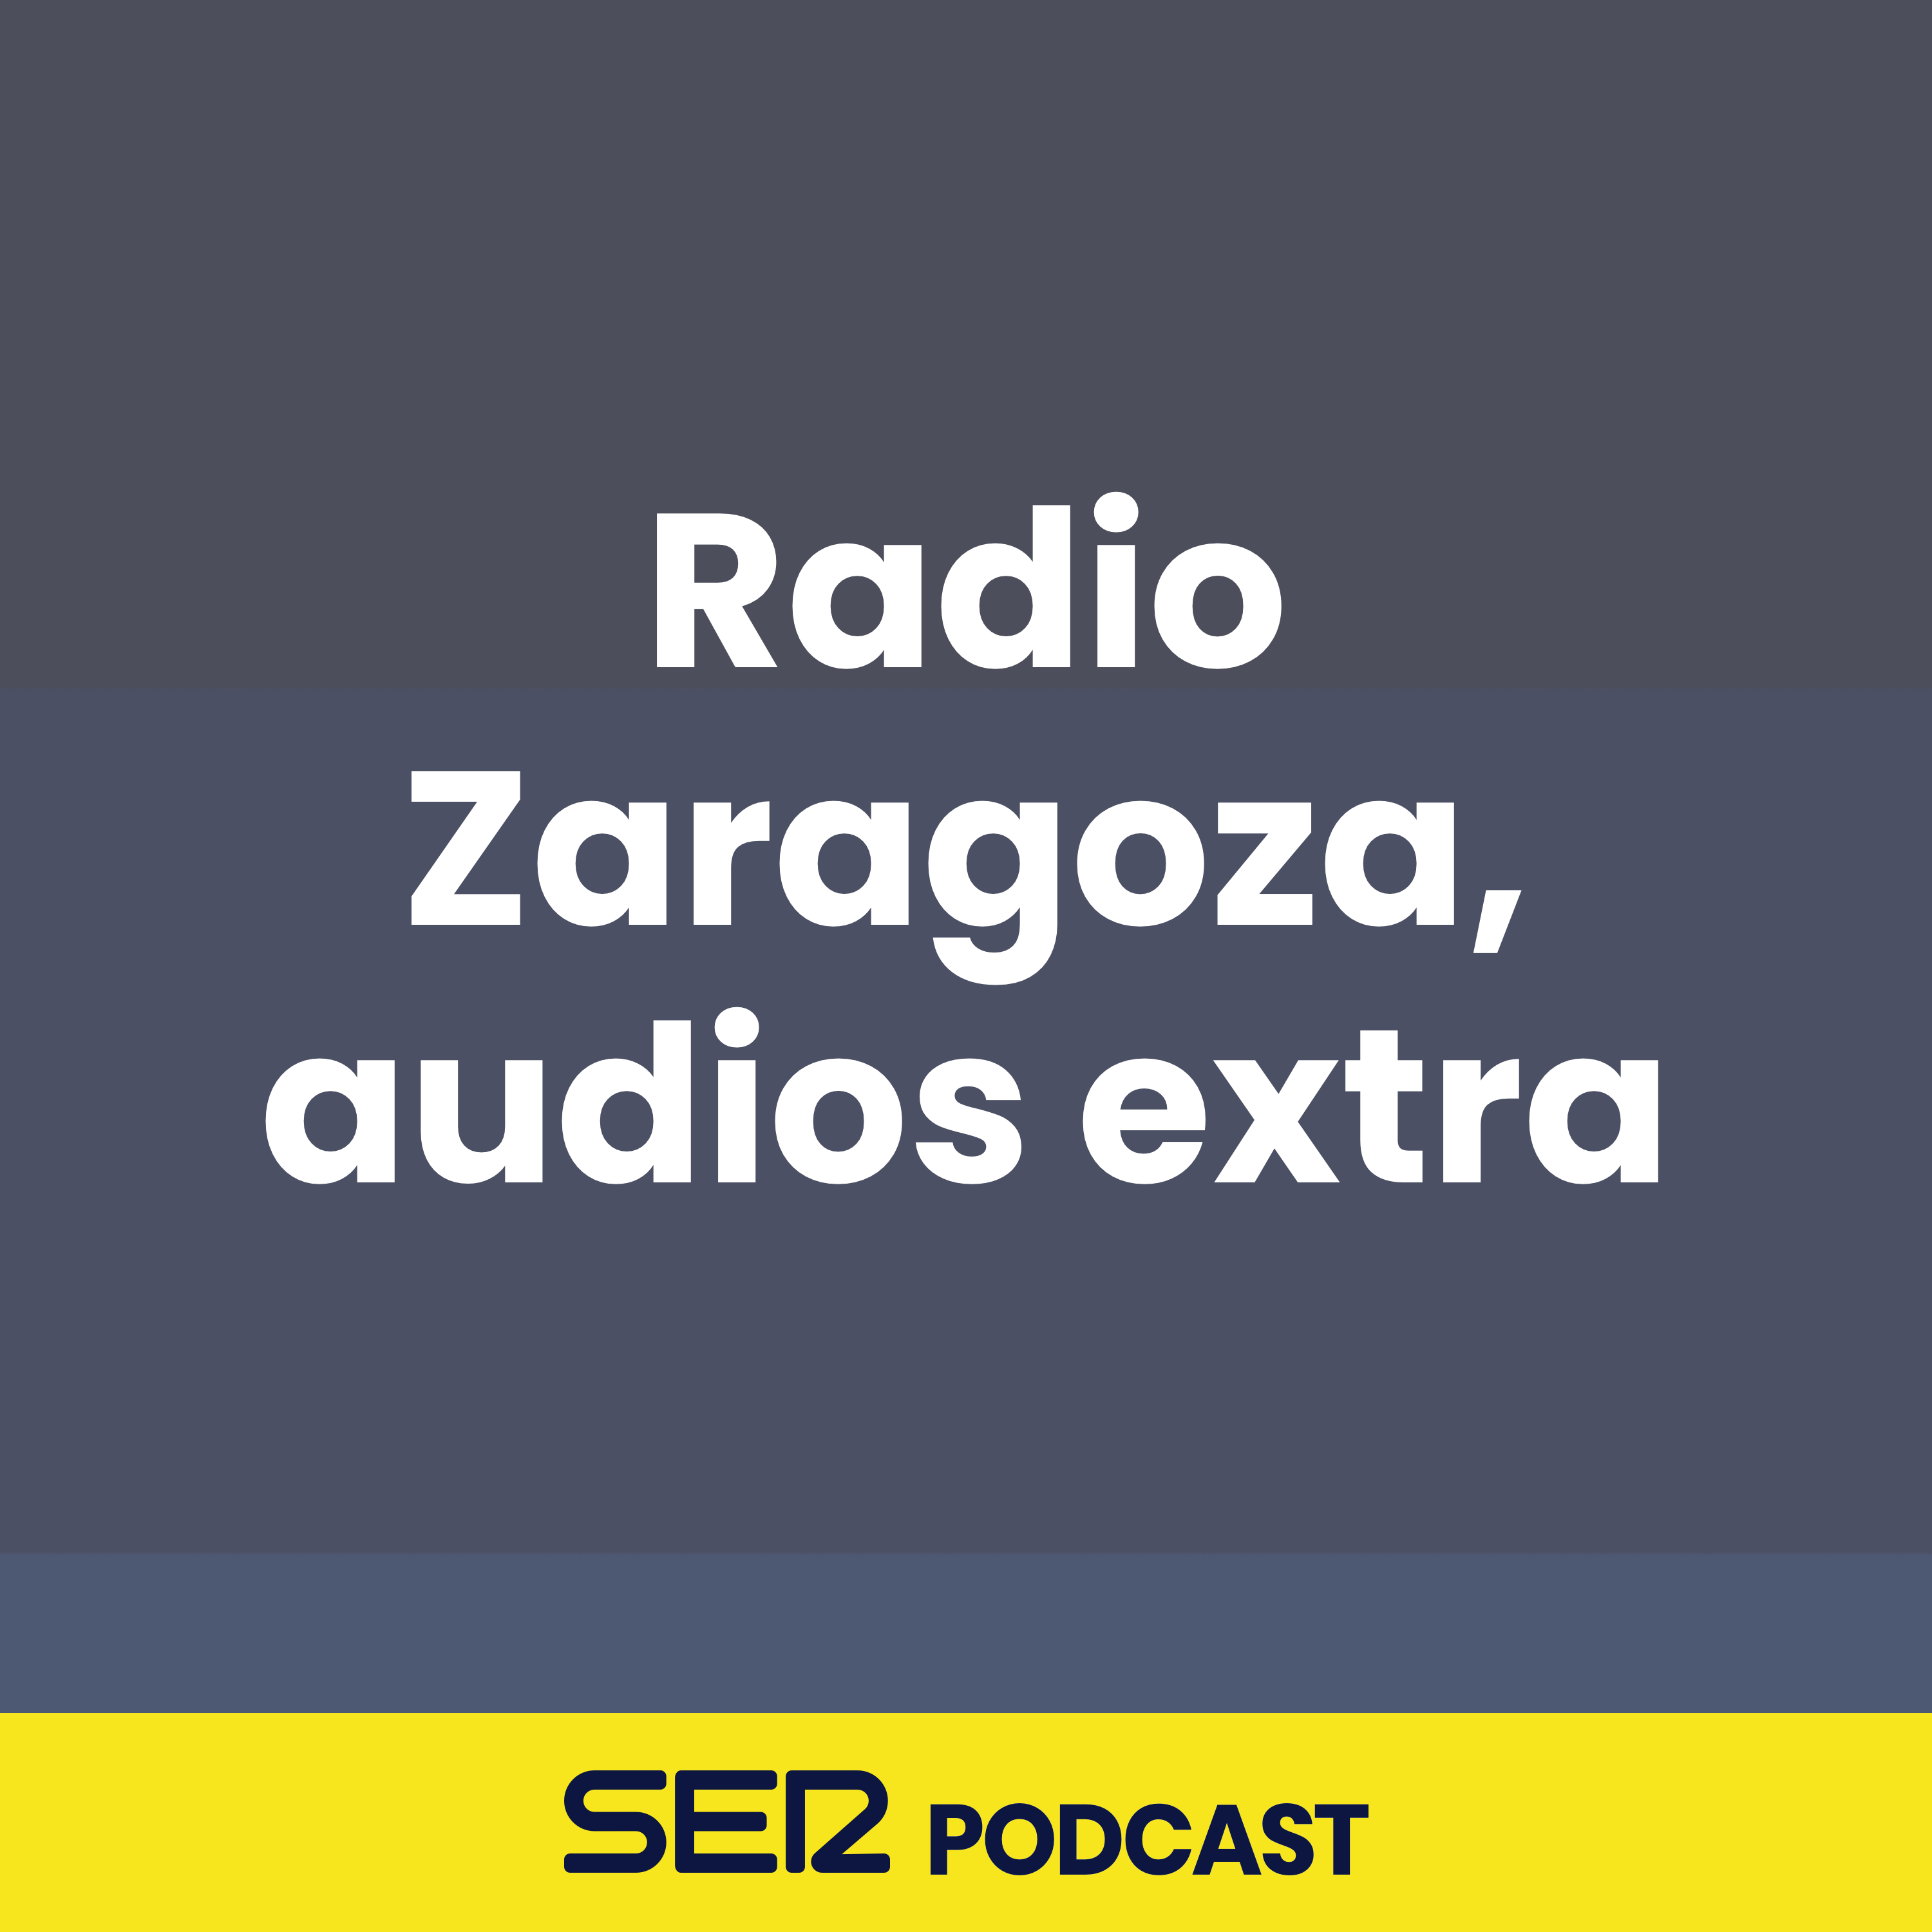 Radio Zaragoza, audios extra